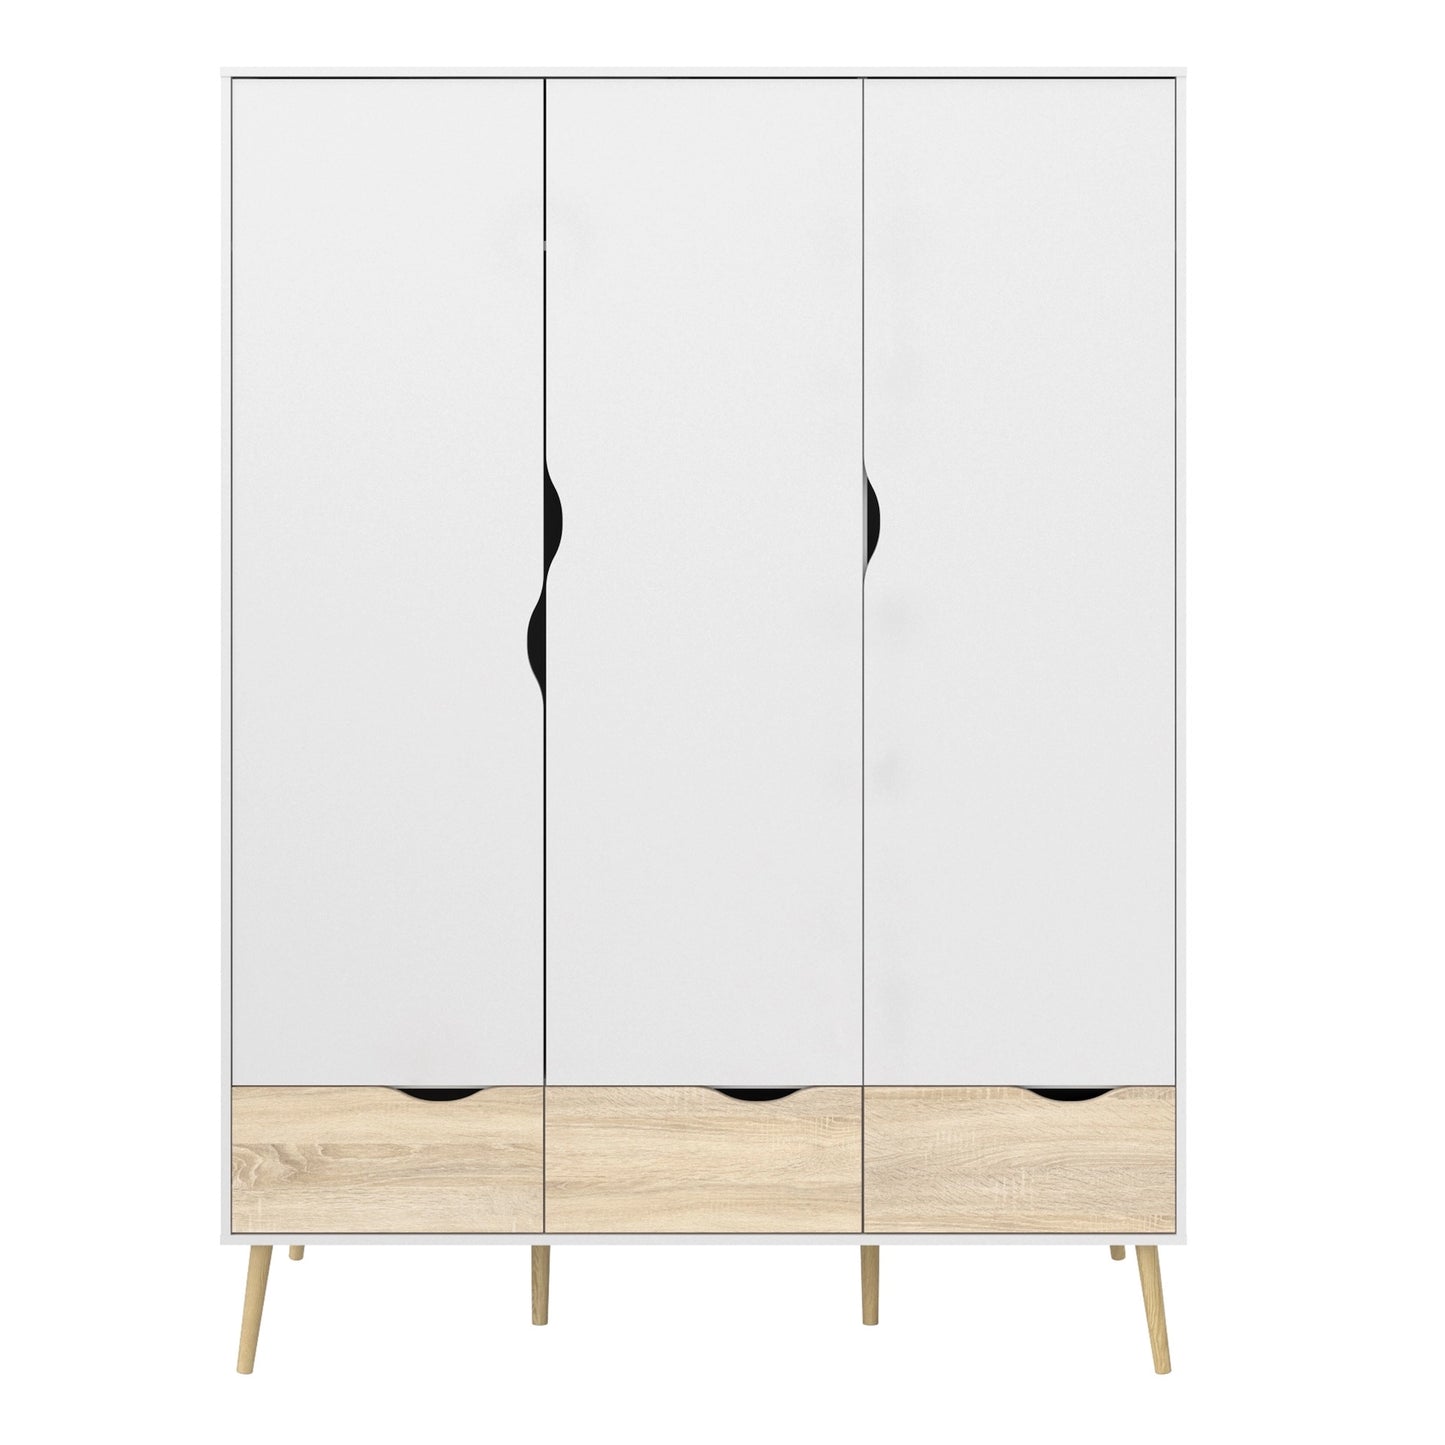 Furniture To Go Oslo Wardrobe 3 Doors 3 Drawers in White & Oak